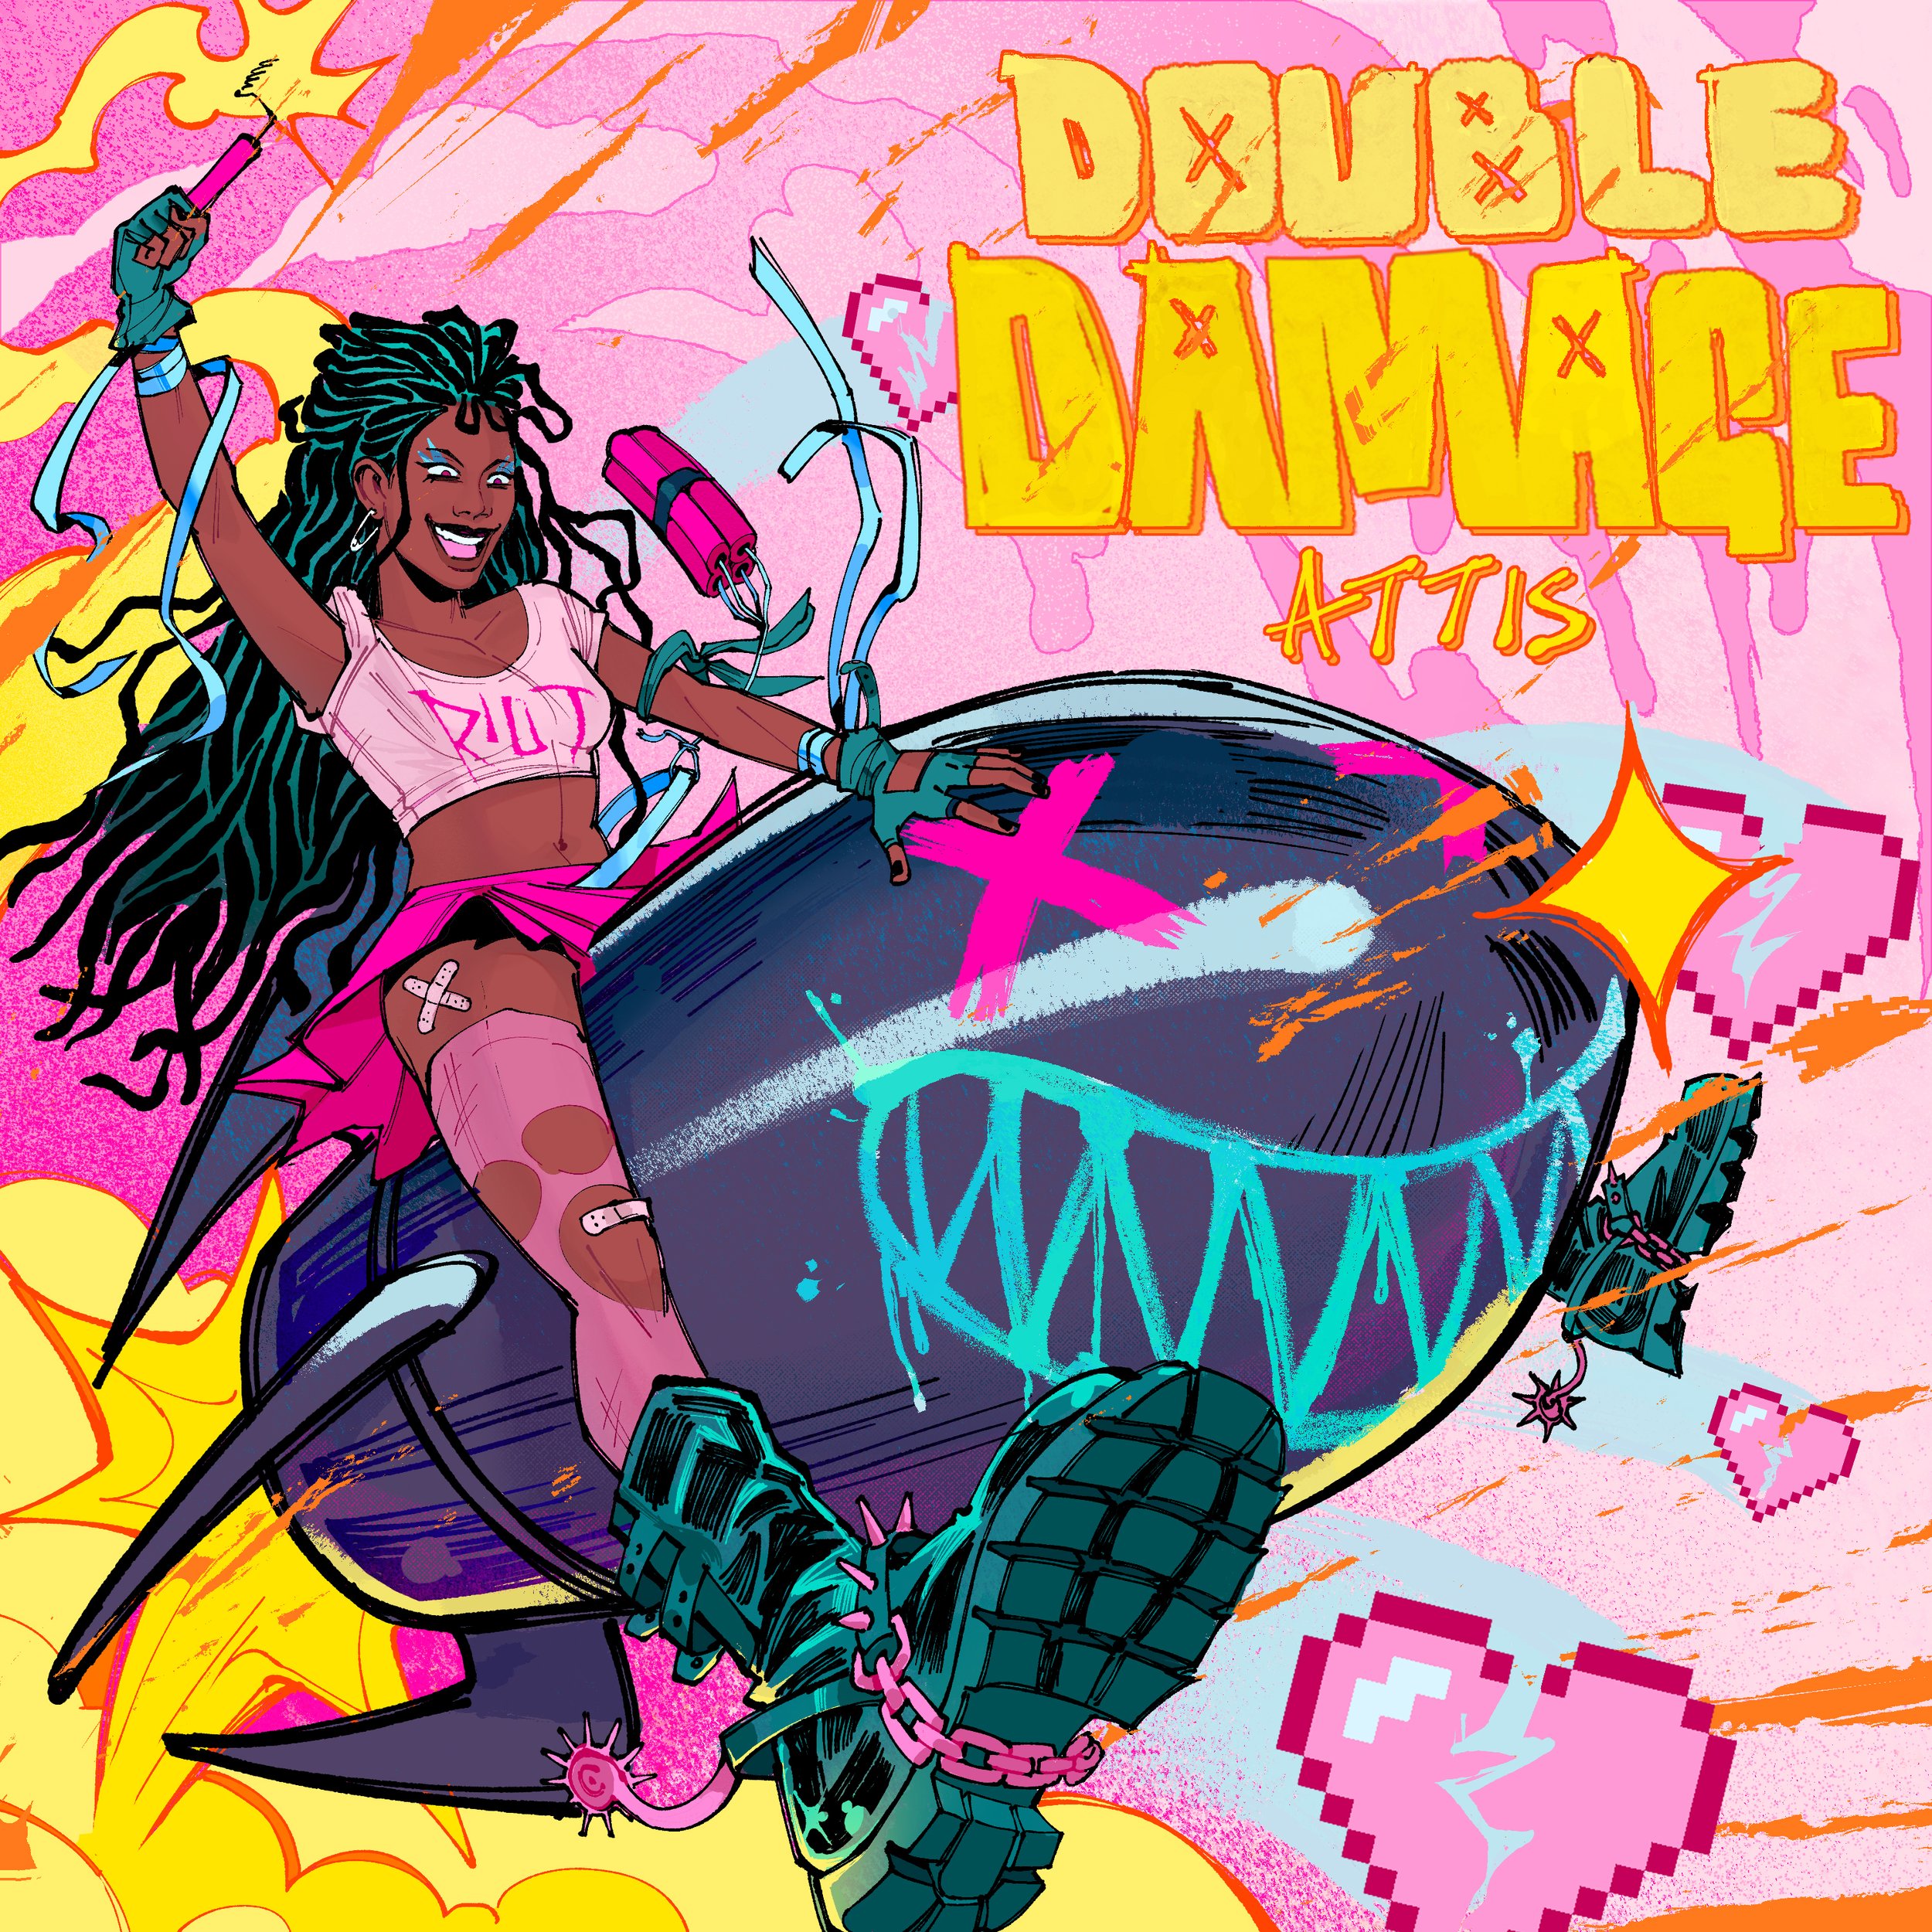  Cover art for ATTIS’ Double Damage single 